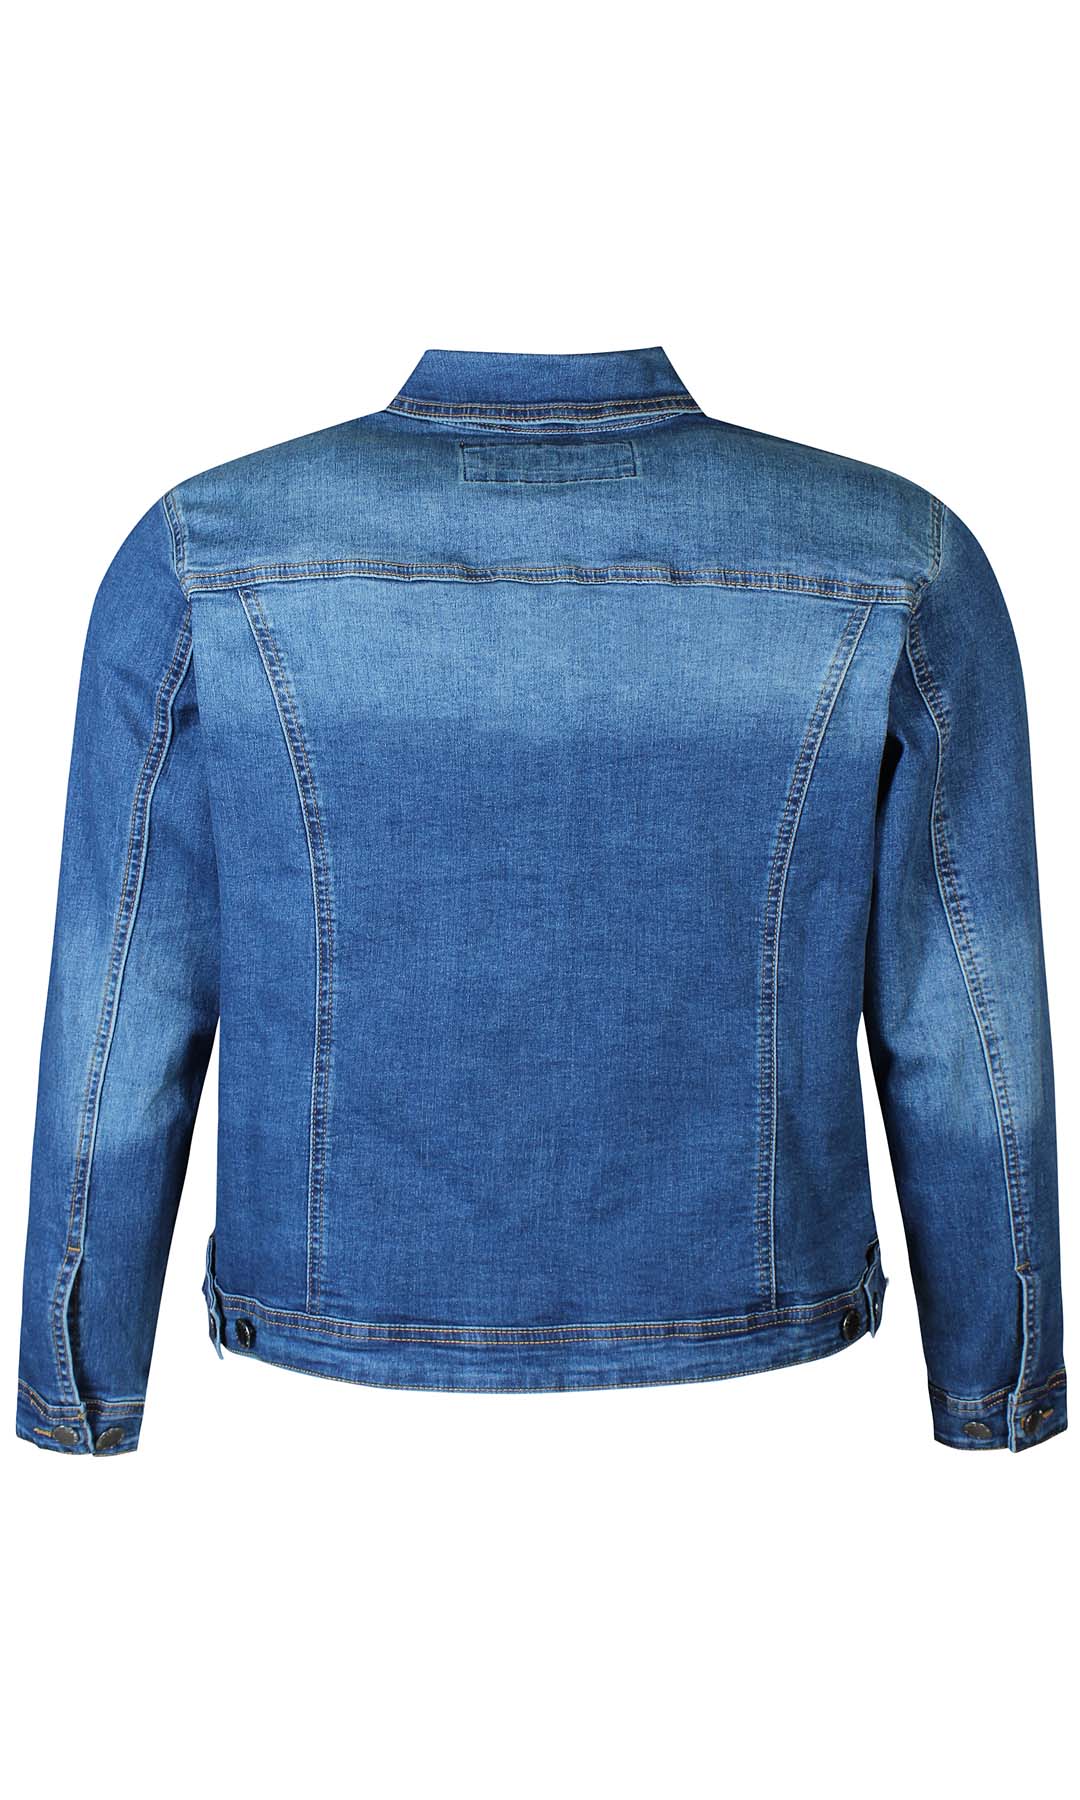 Royal 148 - Denim jacket - Blue